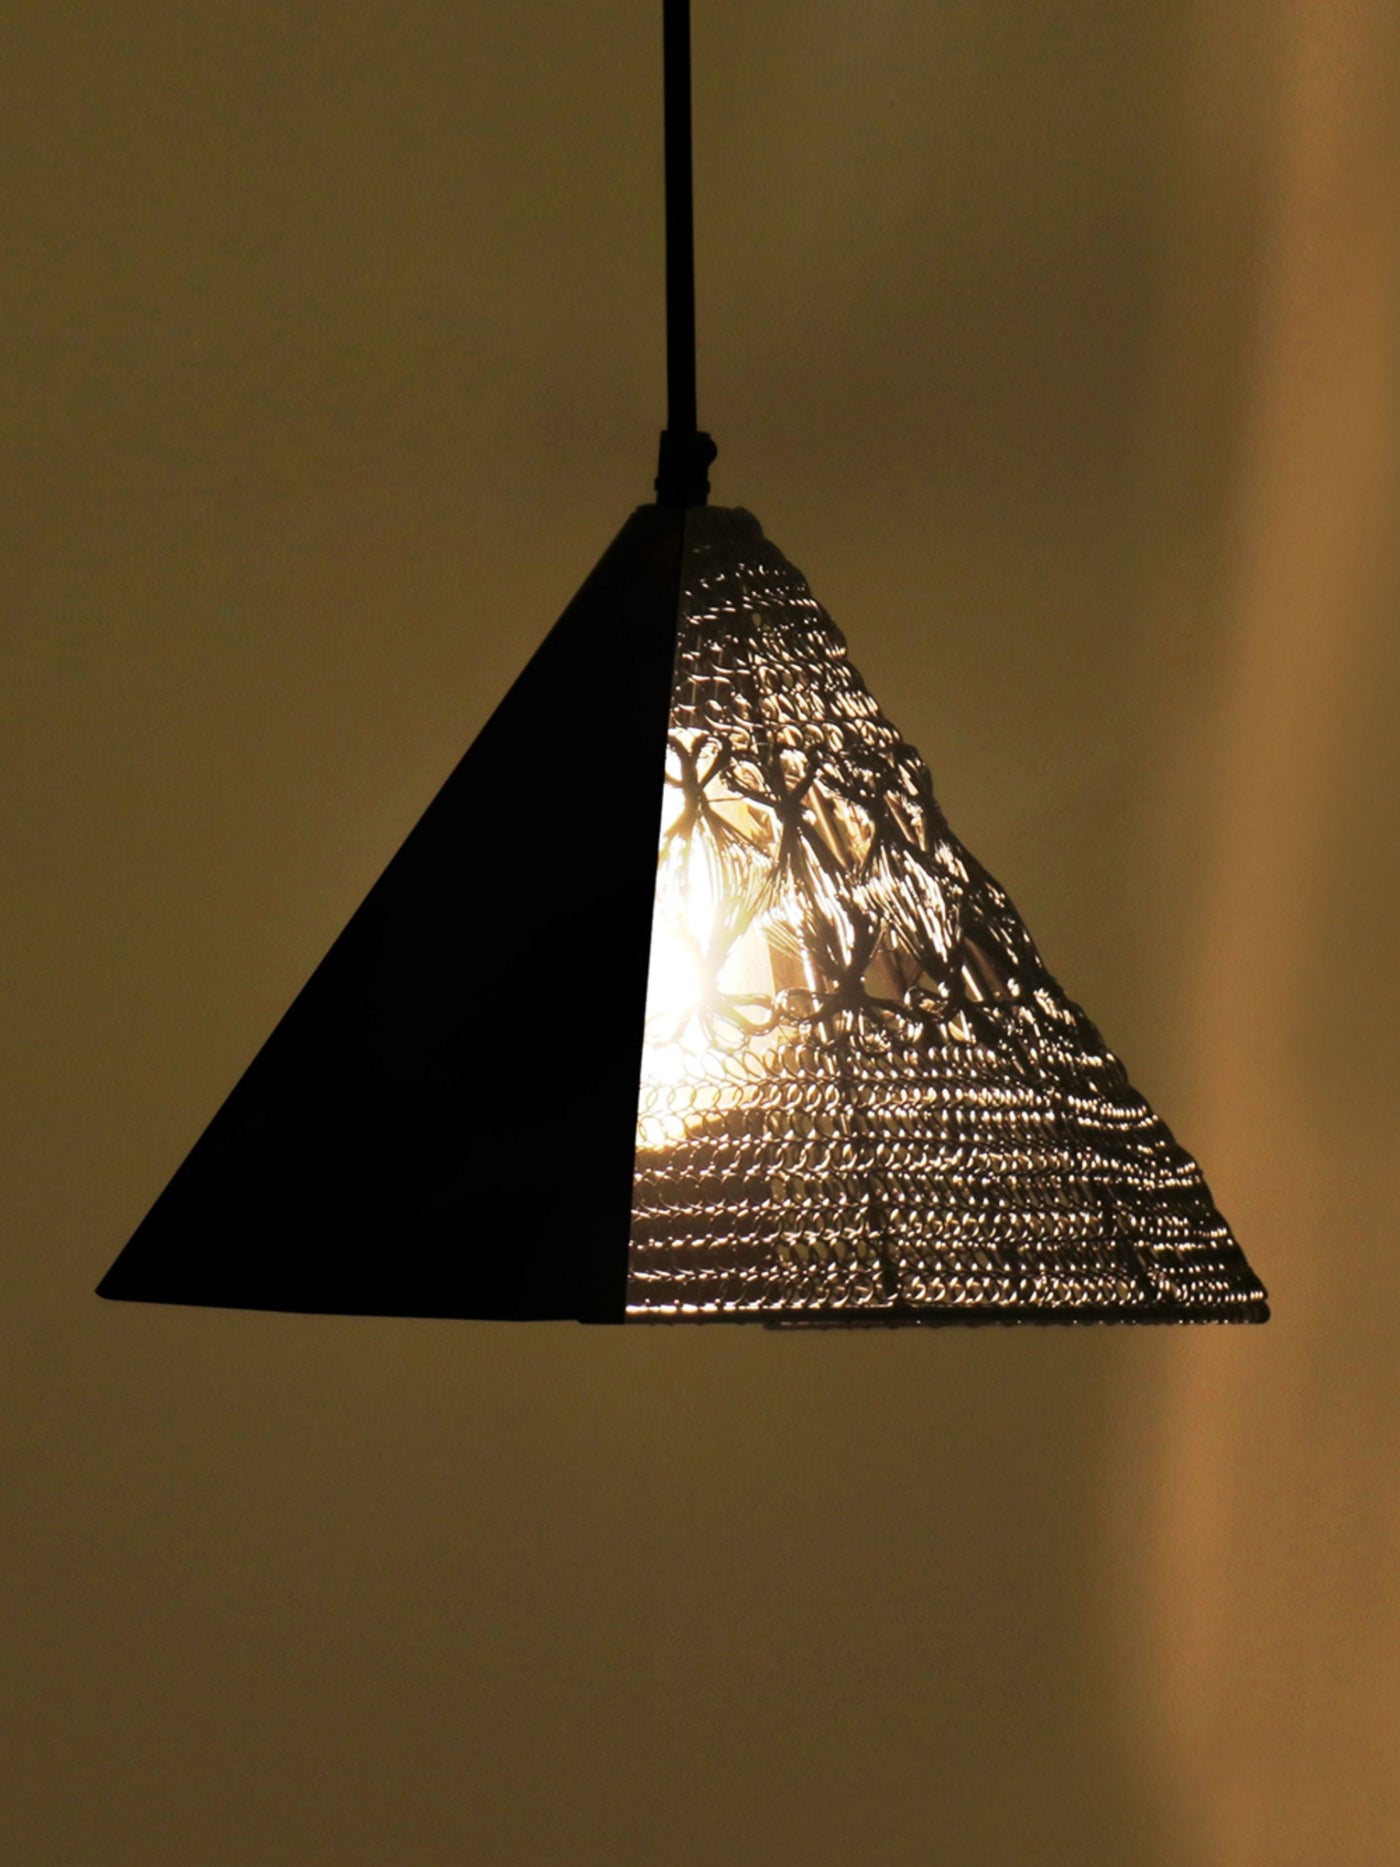 Warind Handcrafted Upward Cone Hanging Lamp